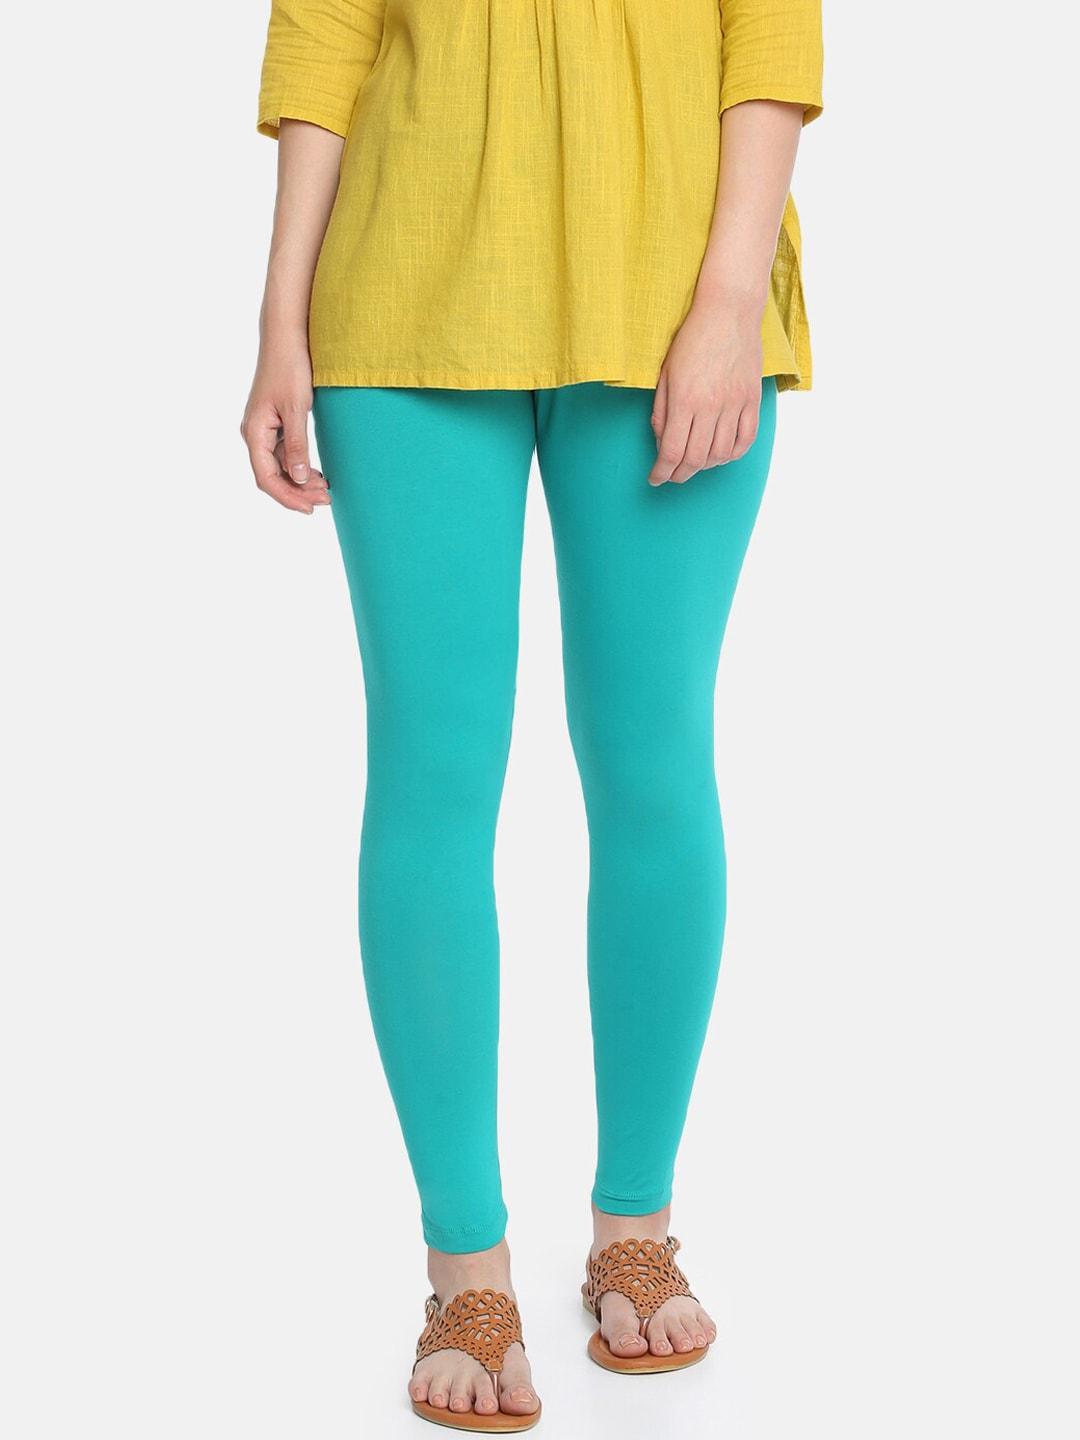 dollar-missy-women-turquoise-blue-solid-ankle-length-leggings